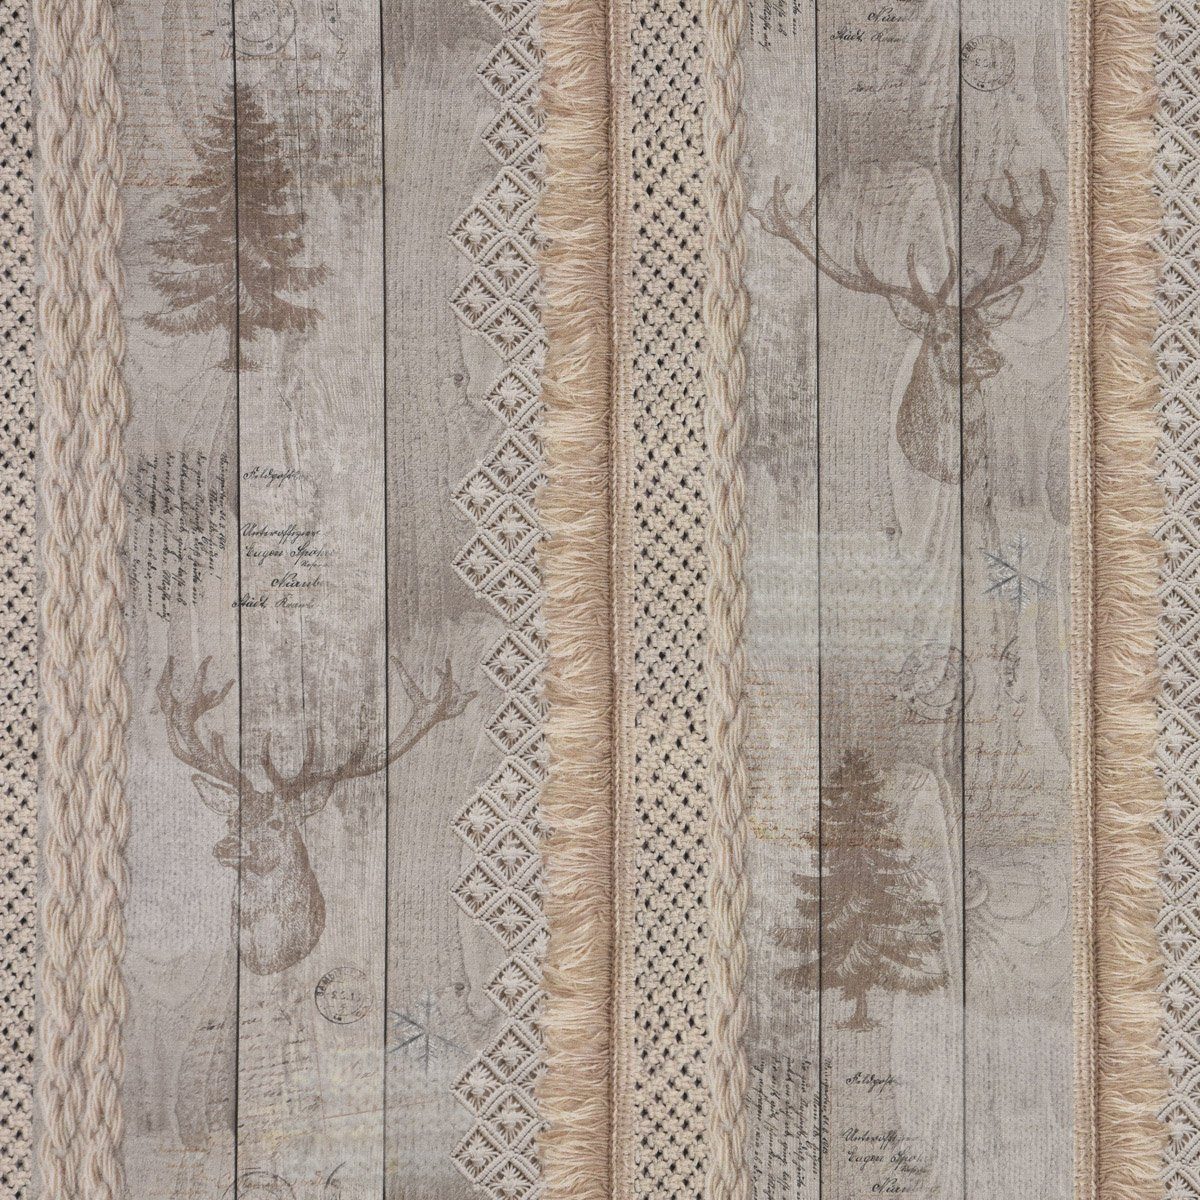 Stoff Dekostoff Digitaldruck Holz Latten Hirschkopf natur braun 1,40m, Digitaldruck